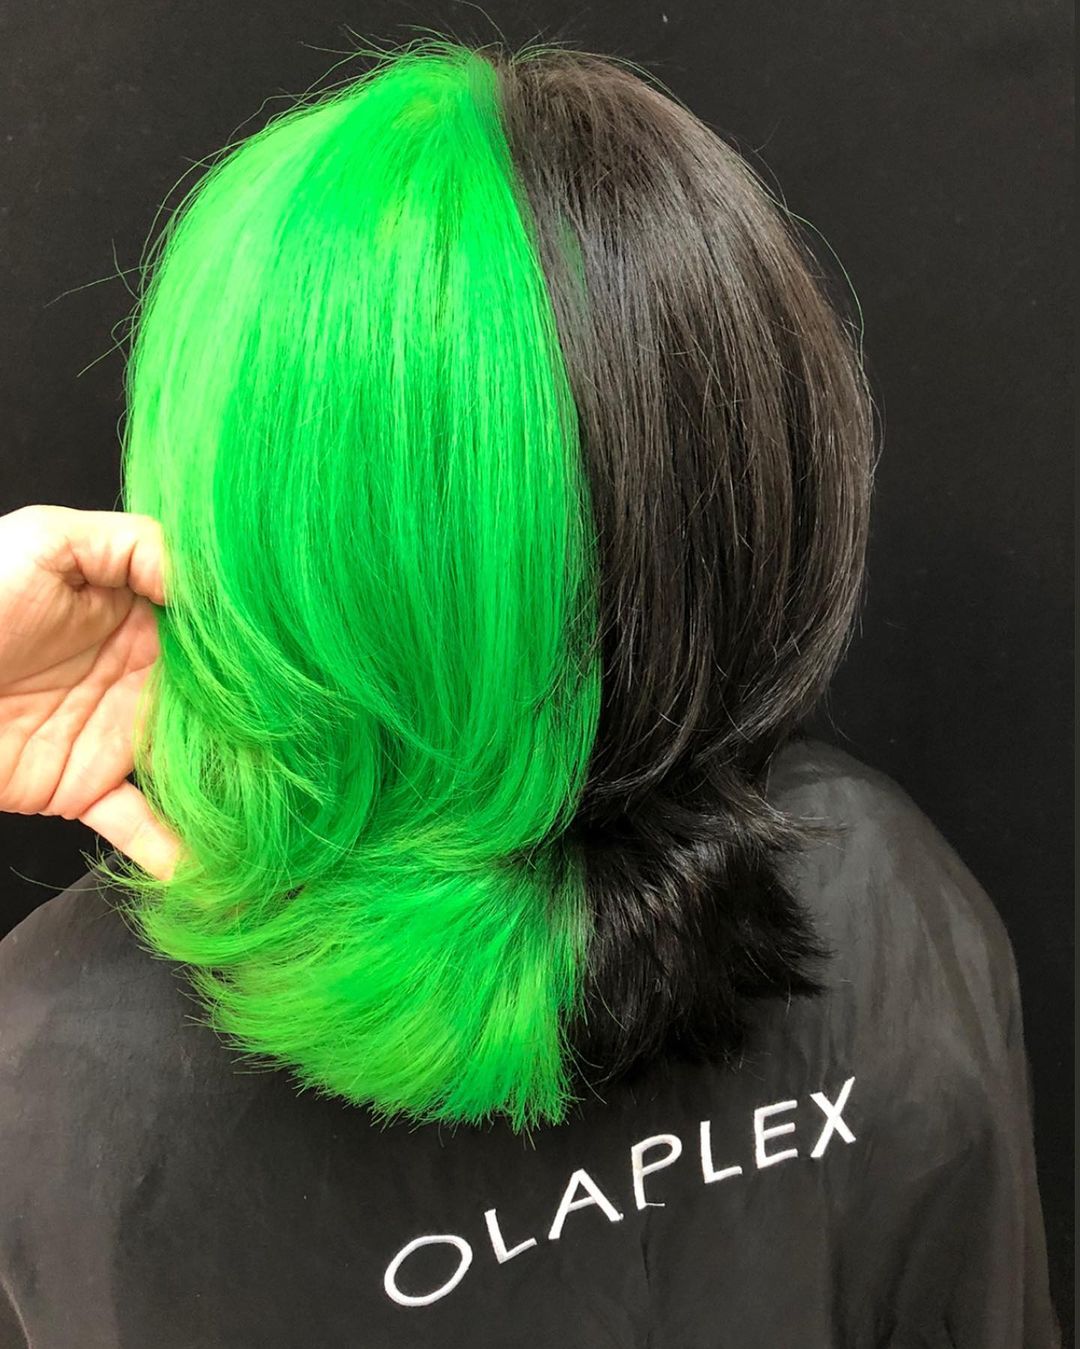 amy lynn sheahan recommends half black half neon green hair pic